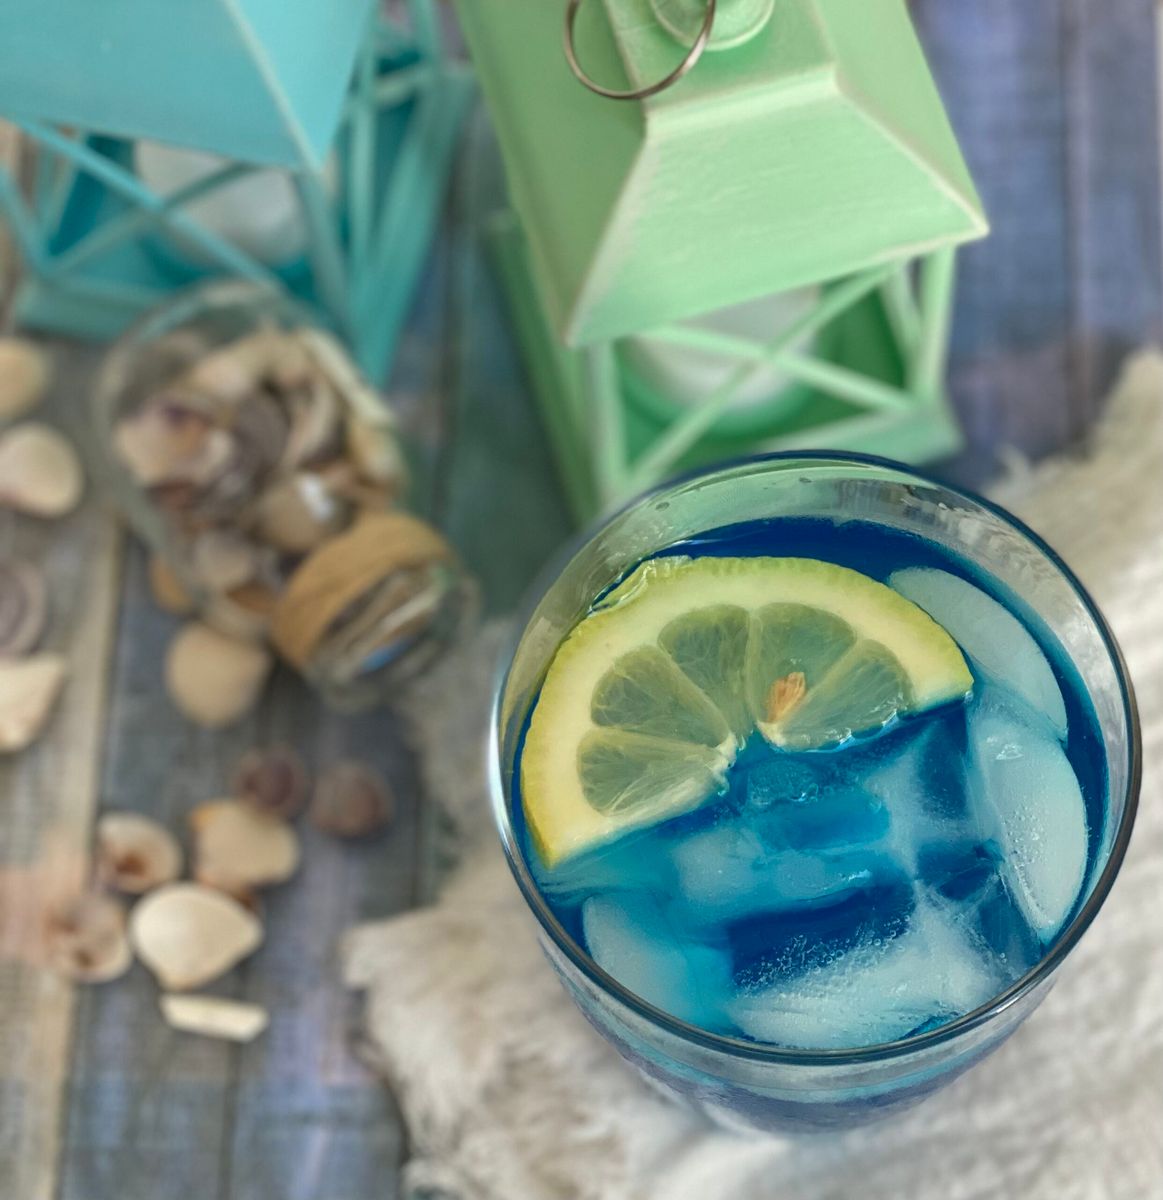 Refreshing Blue Curacao Lemonade Drink